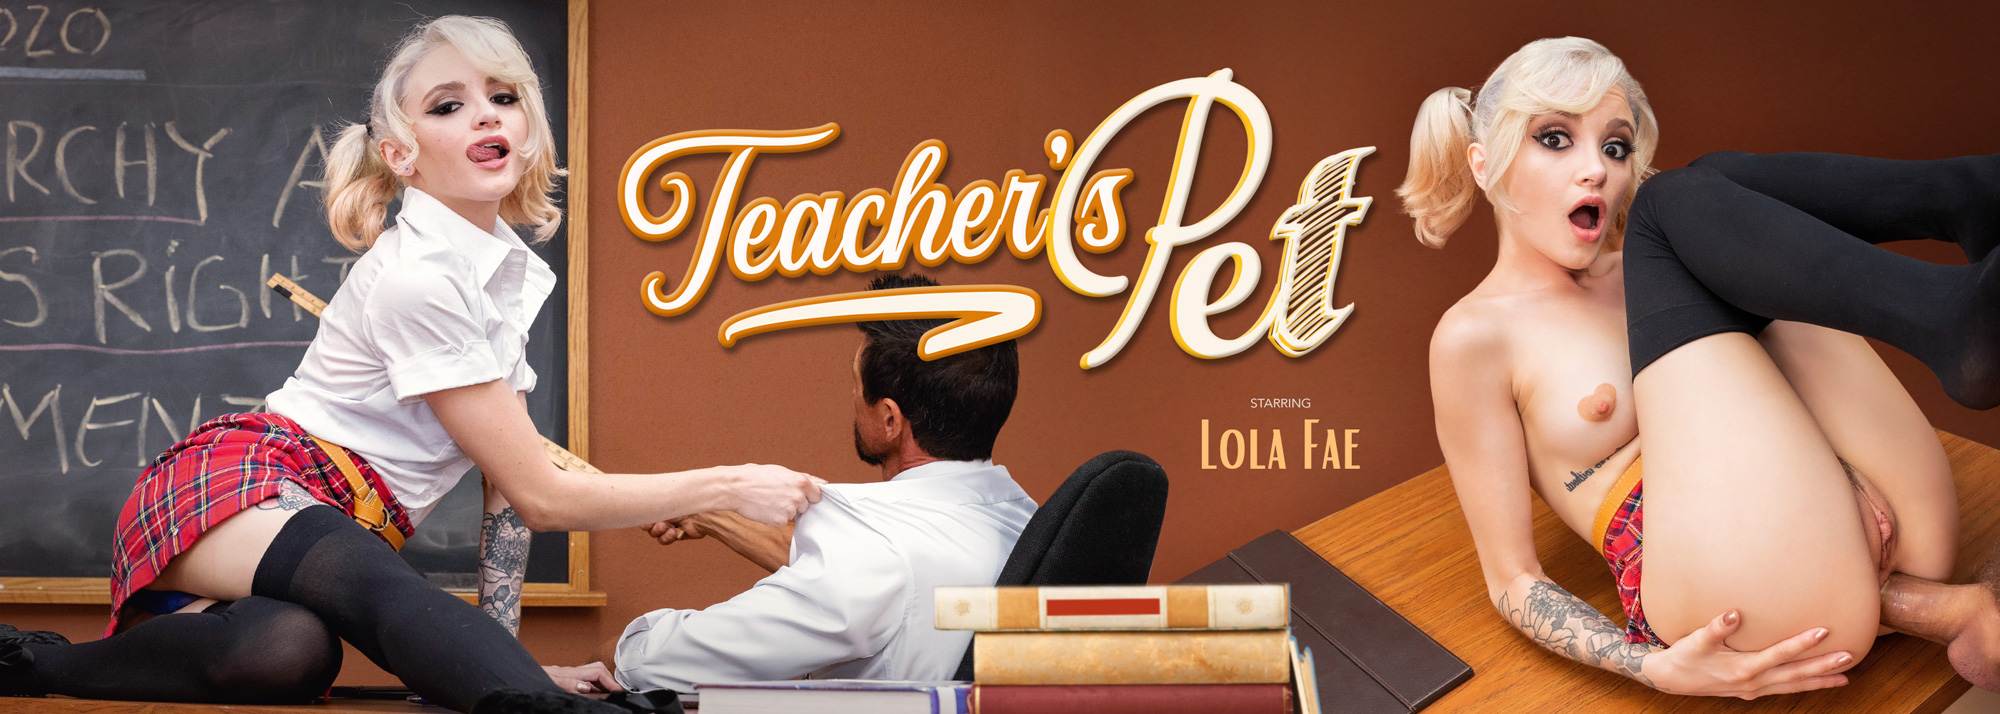 Teacher's Pet - VR Porn Video, Starring: Lola Fae